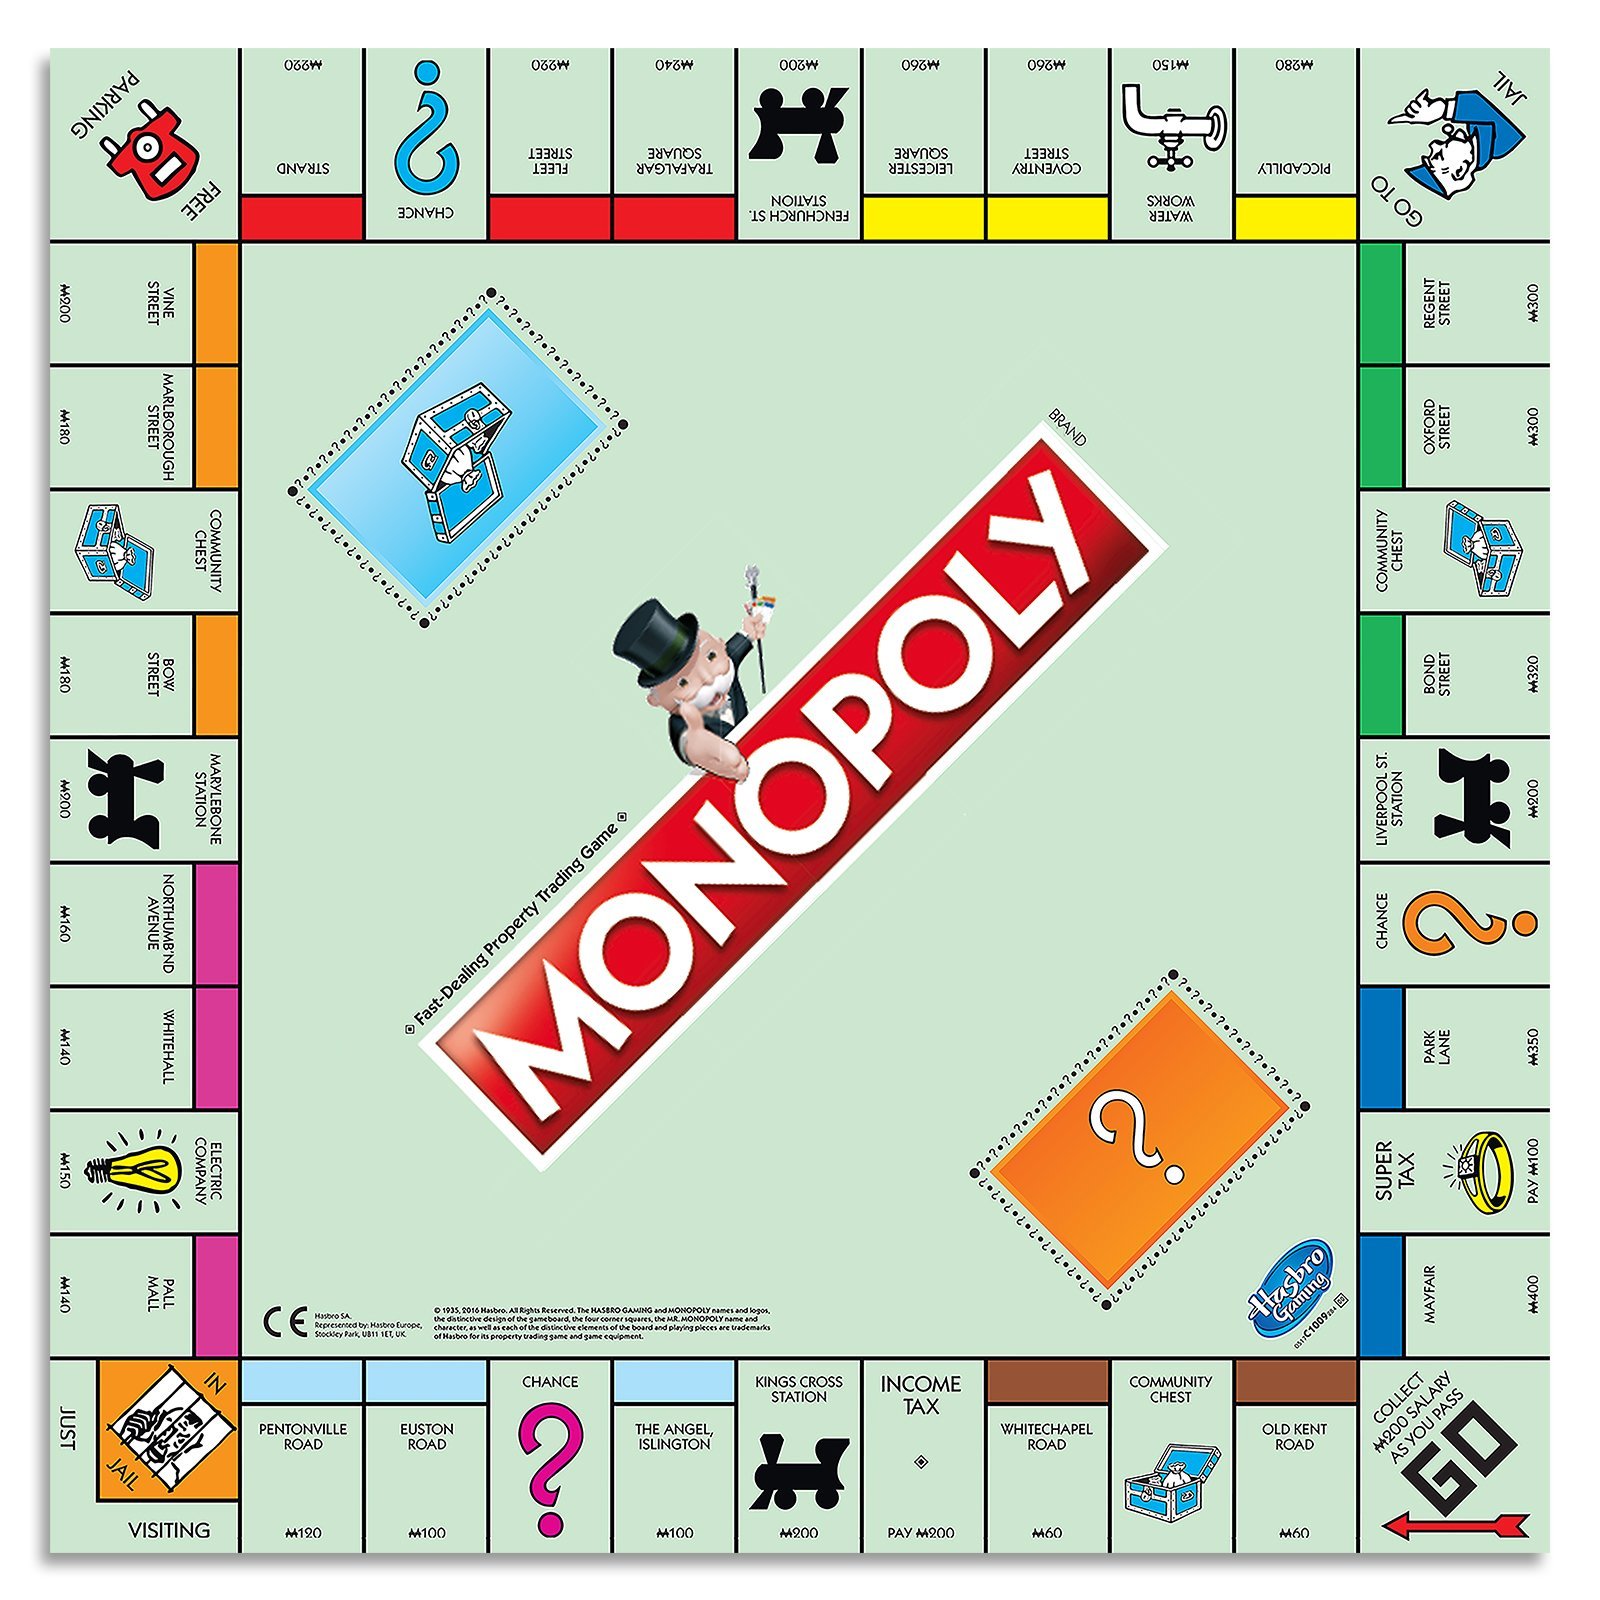 original monopoly board